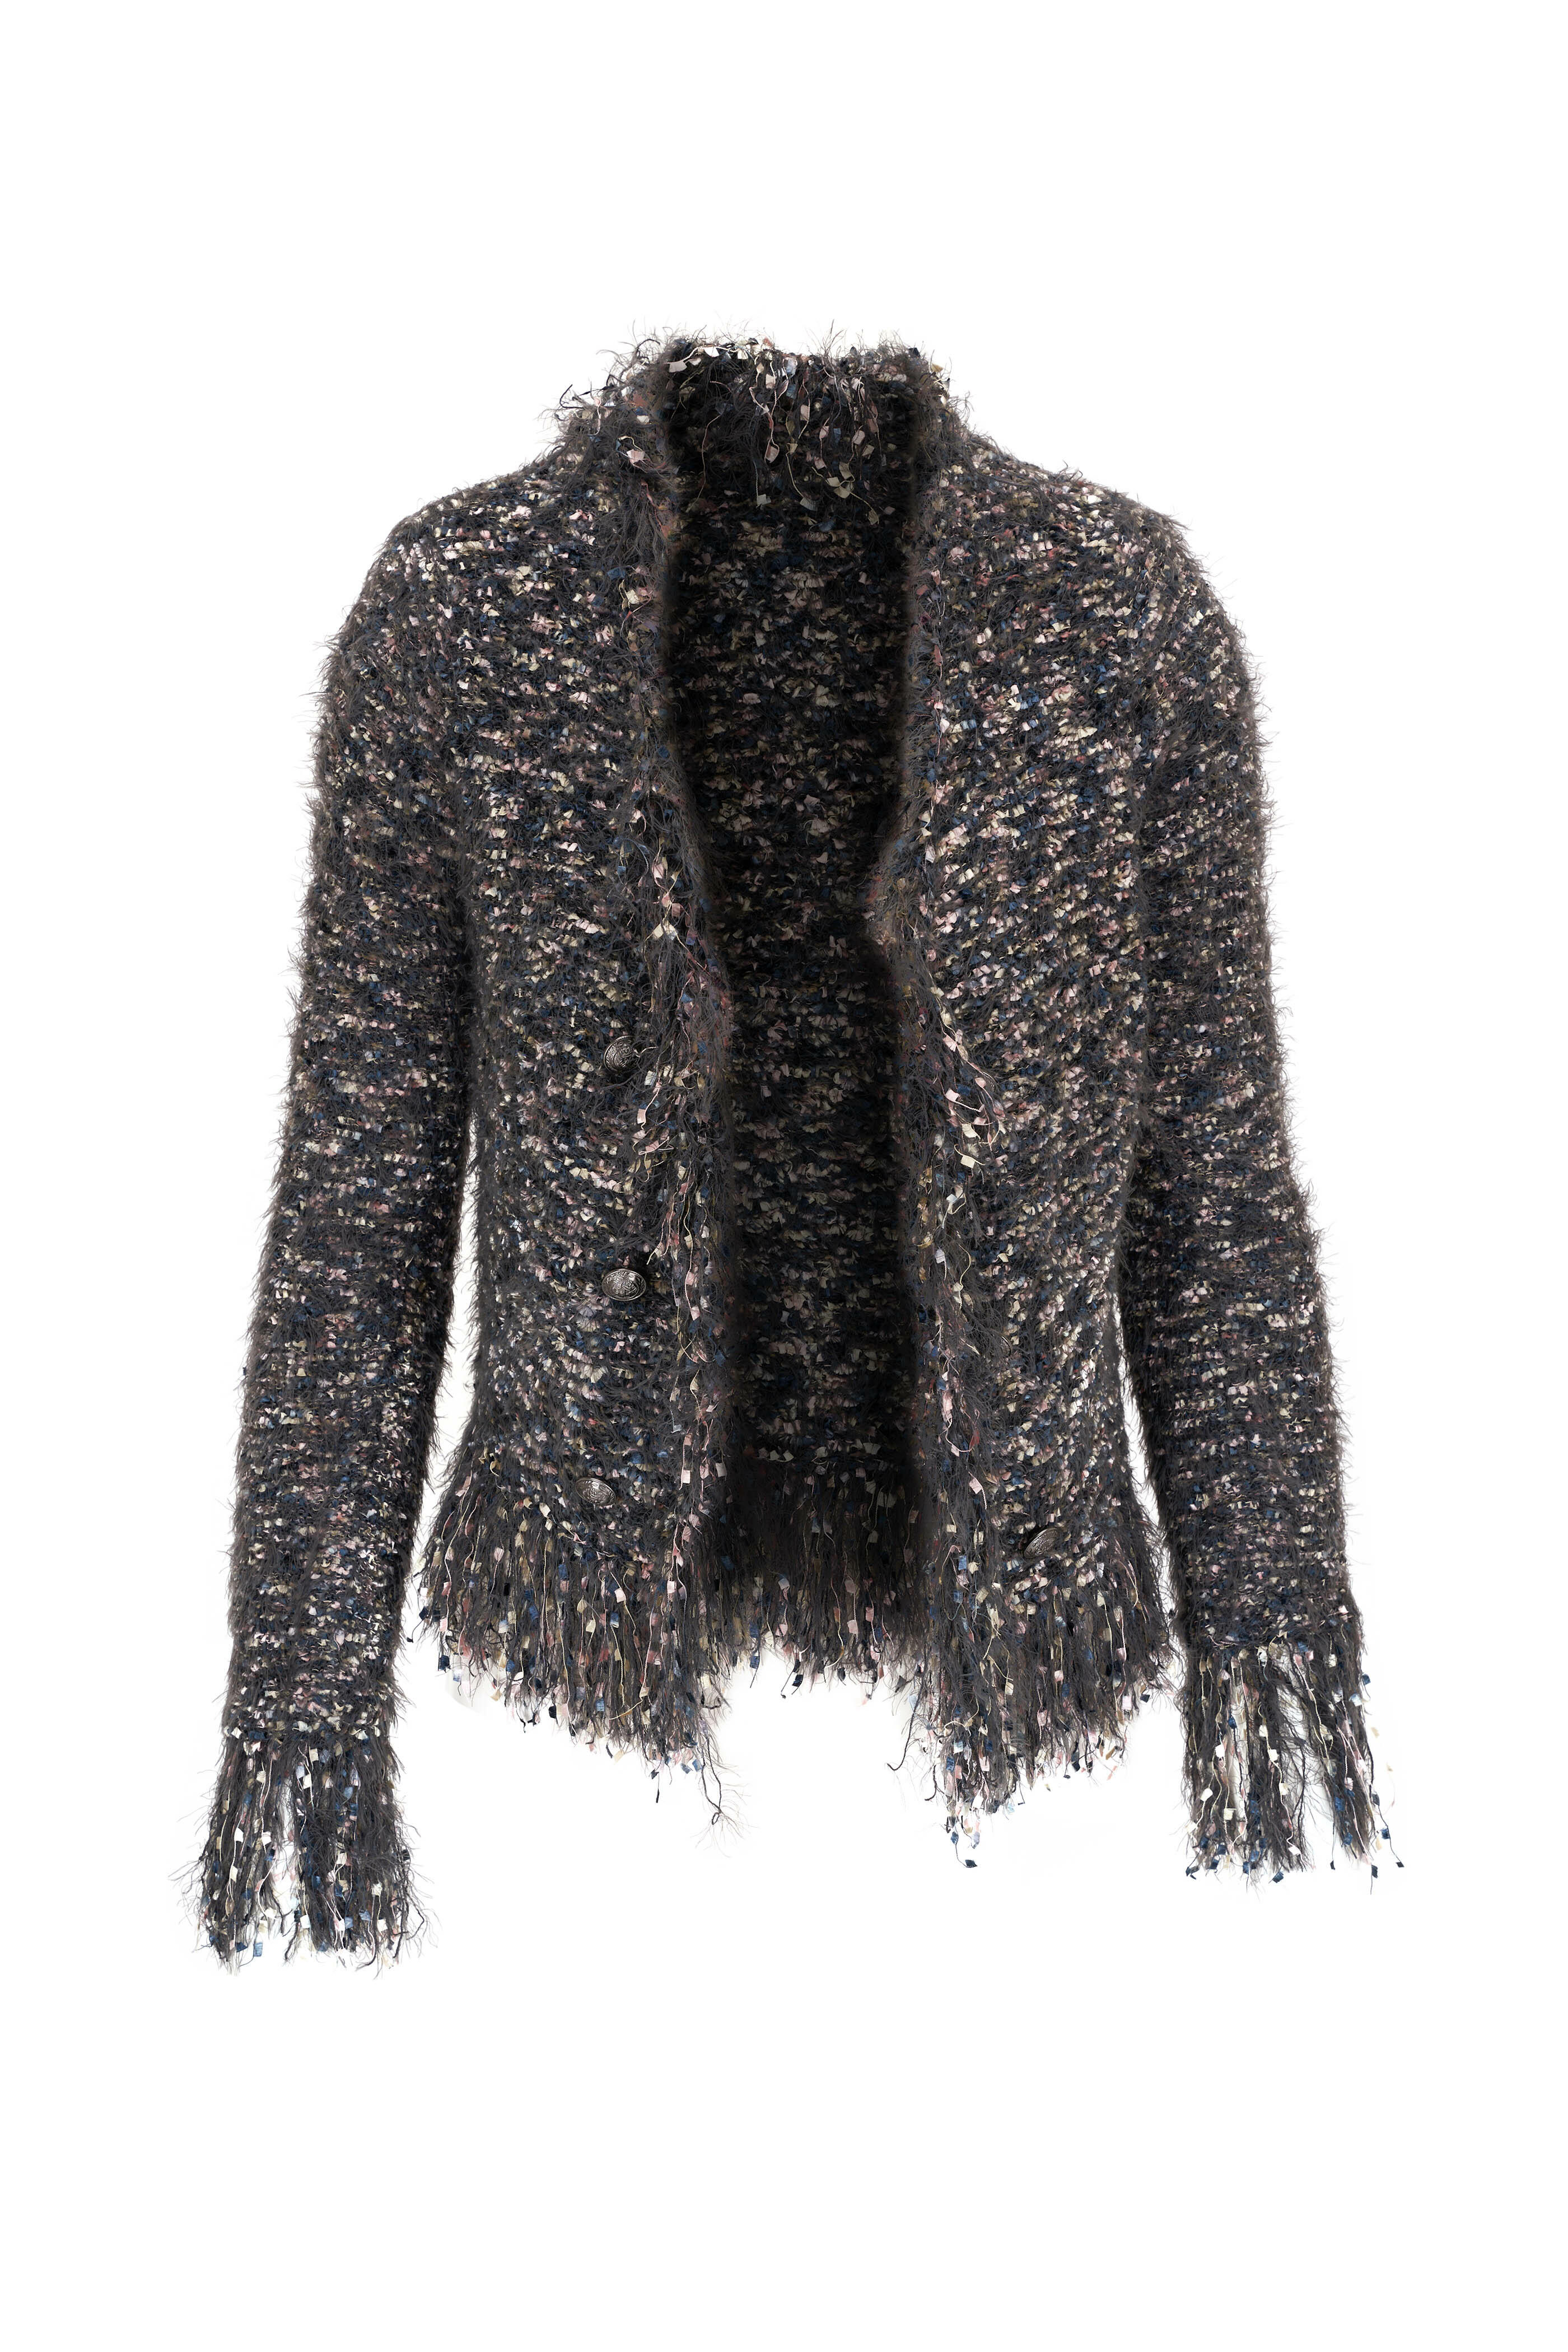 L'Agence - Azure Gray Multi Confetti Knit Cardigan Blazer